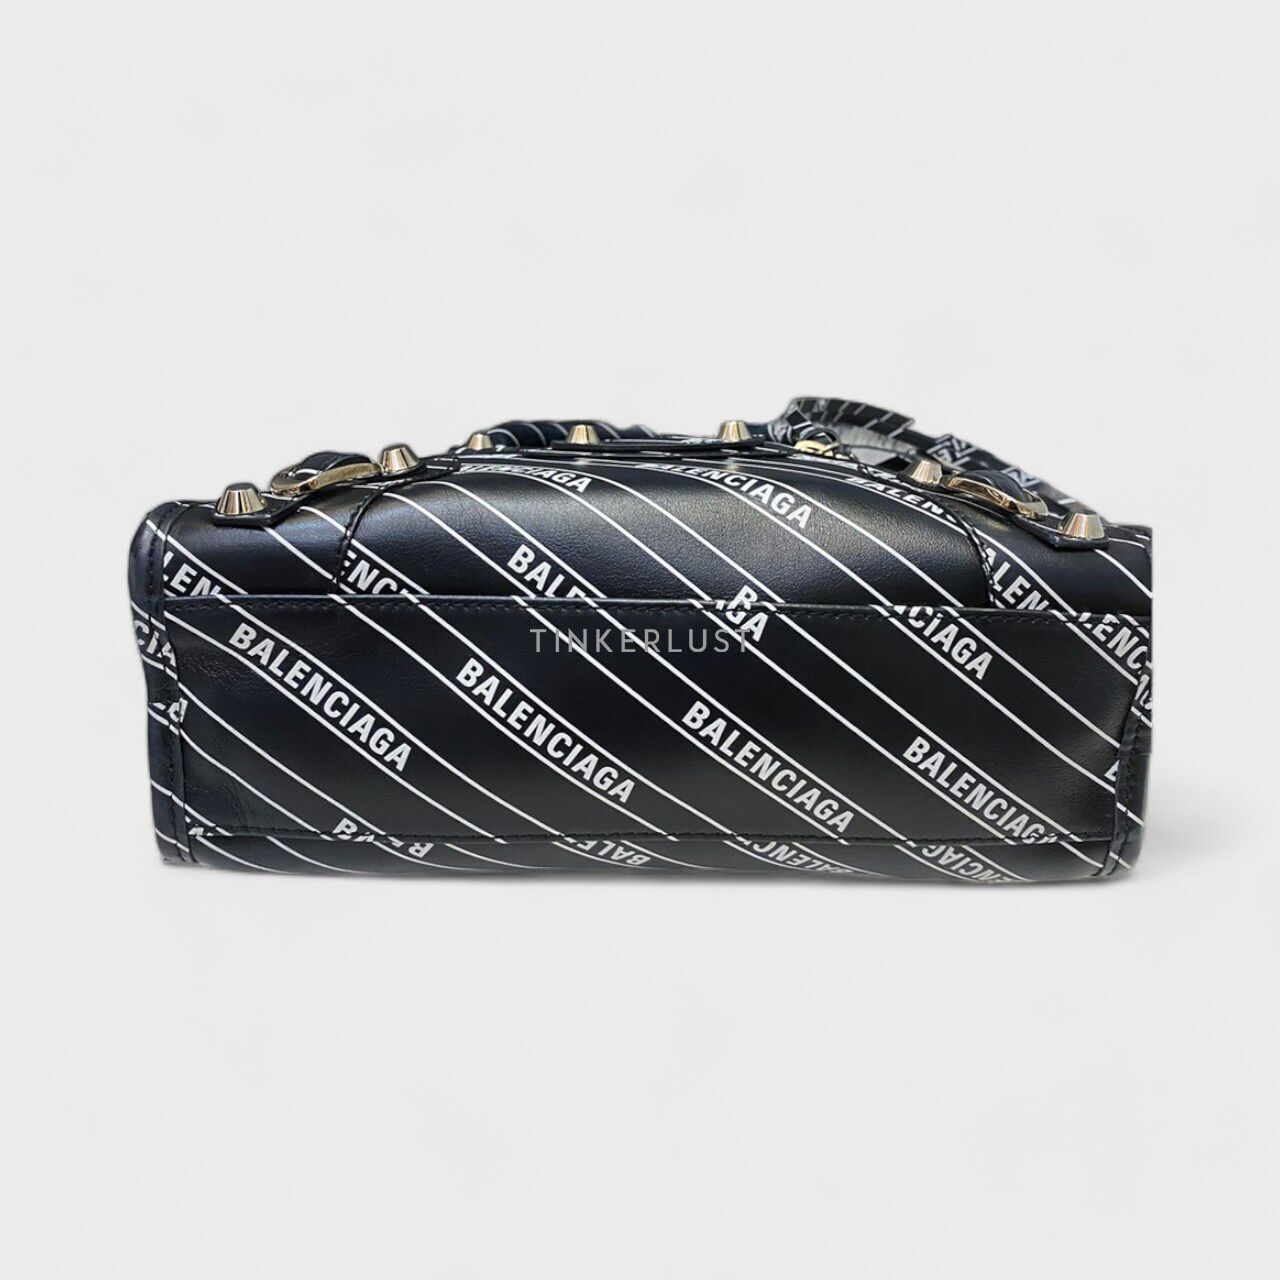 Balenciaga All Over Logo Print Black Leather 2019 Satchel